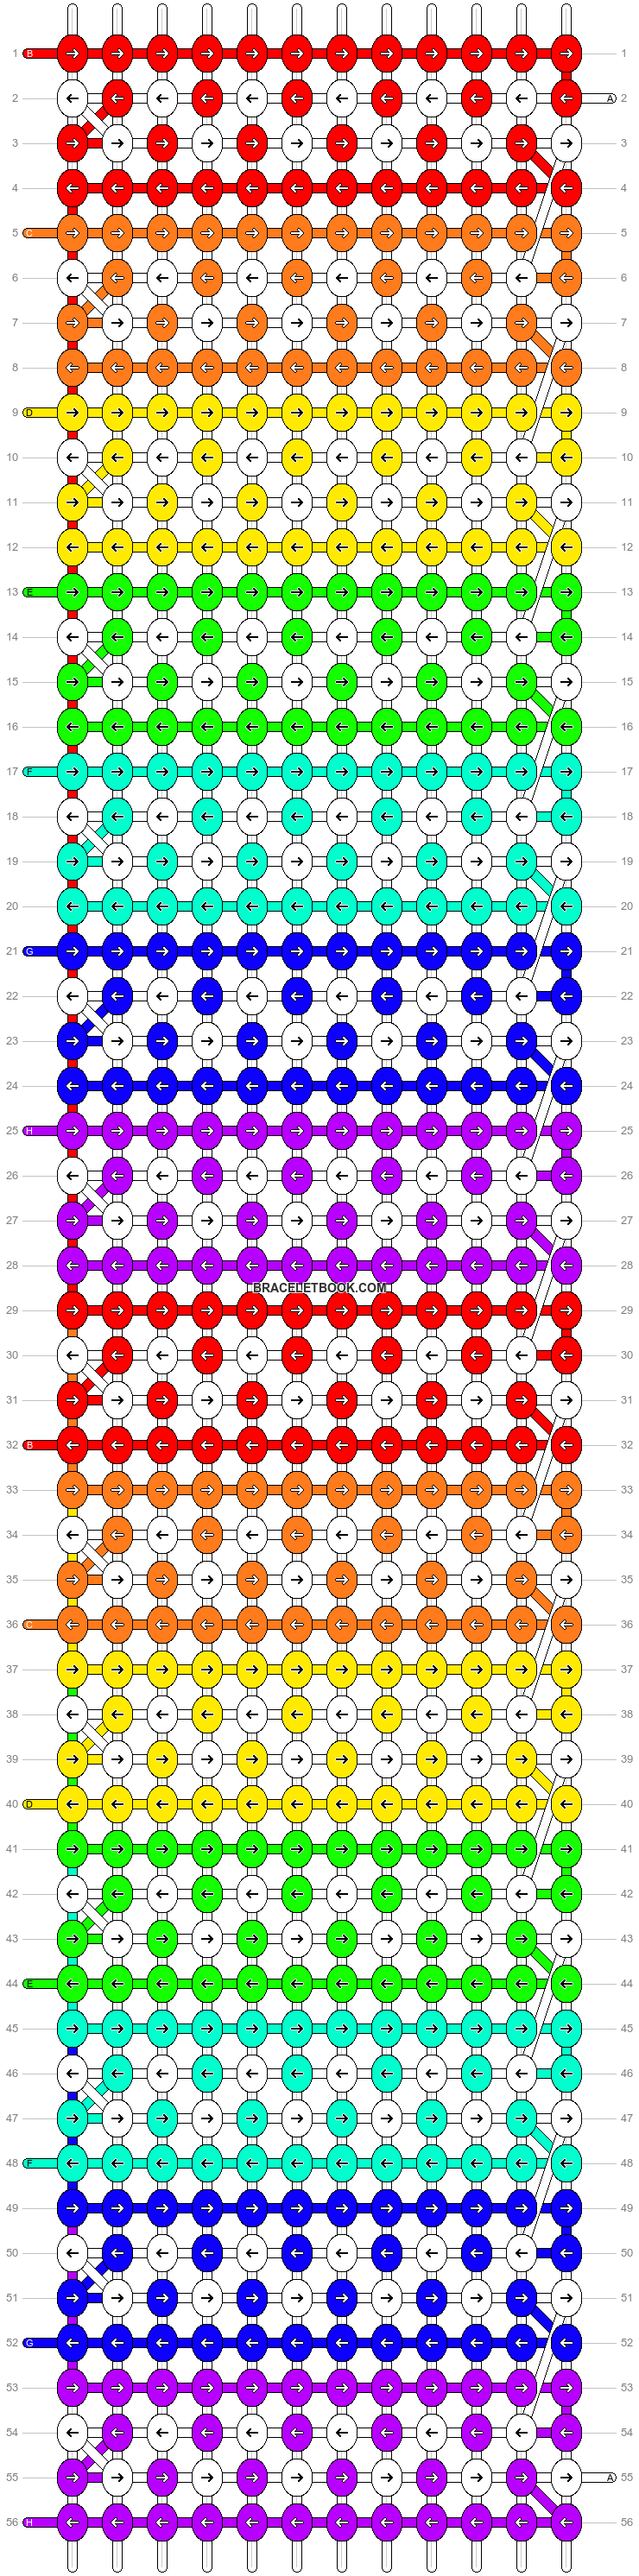 Alpha pattern #50441 variation #97099 pattern